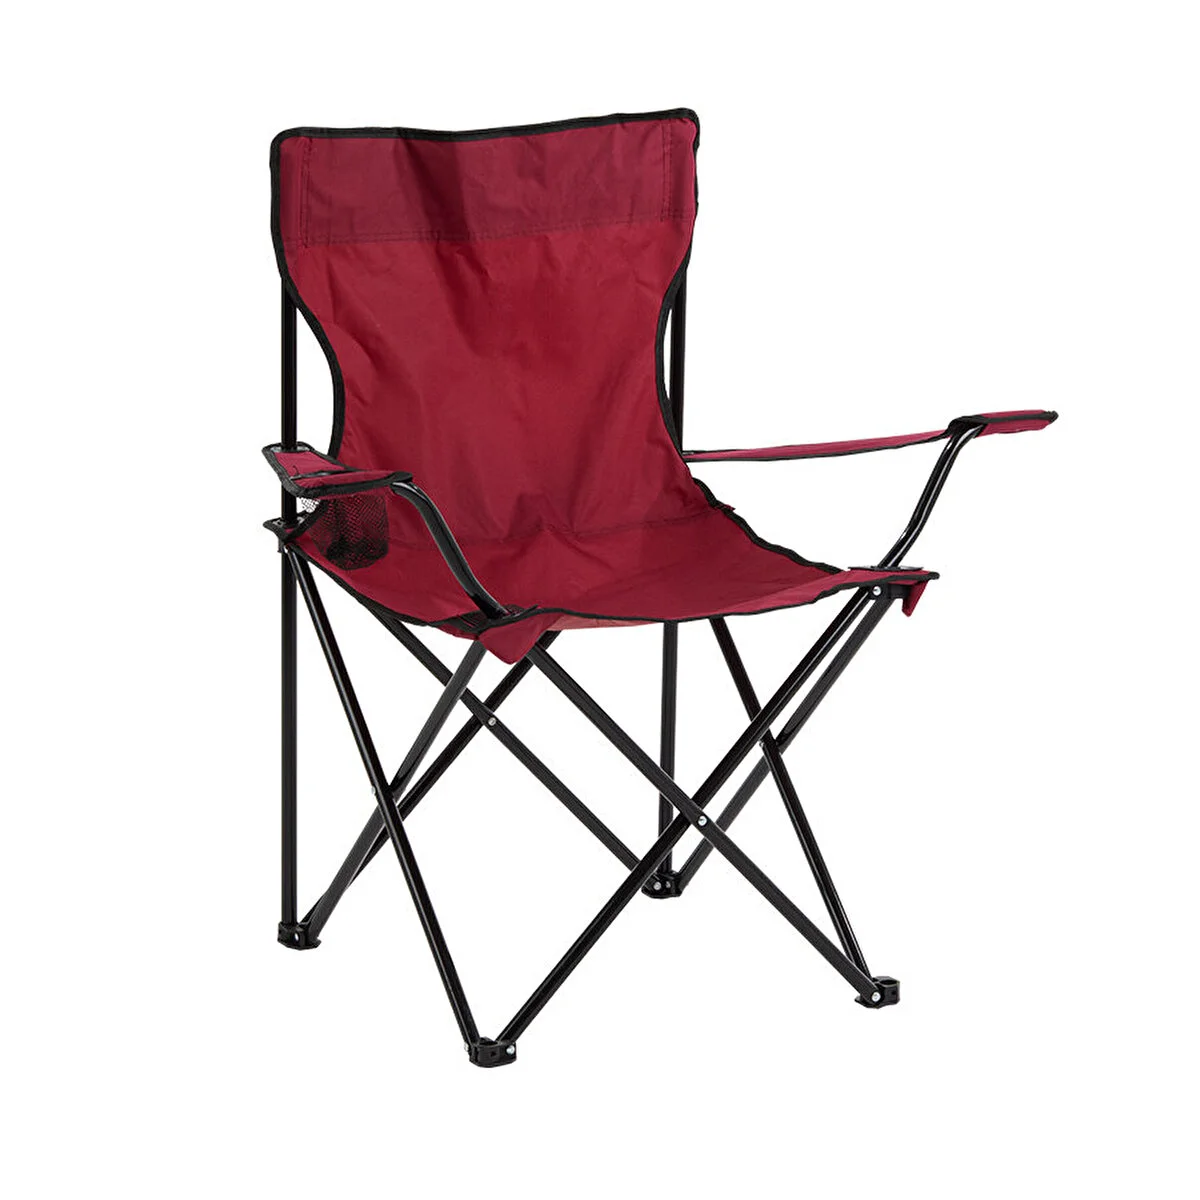 Basic Metal İskelet Katlanabilir Kamp Sandalyesi Bordo - Thumbnail